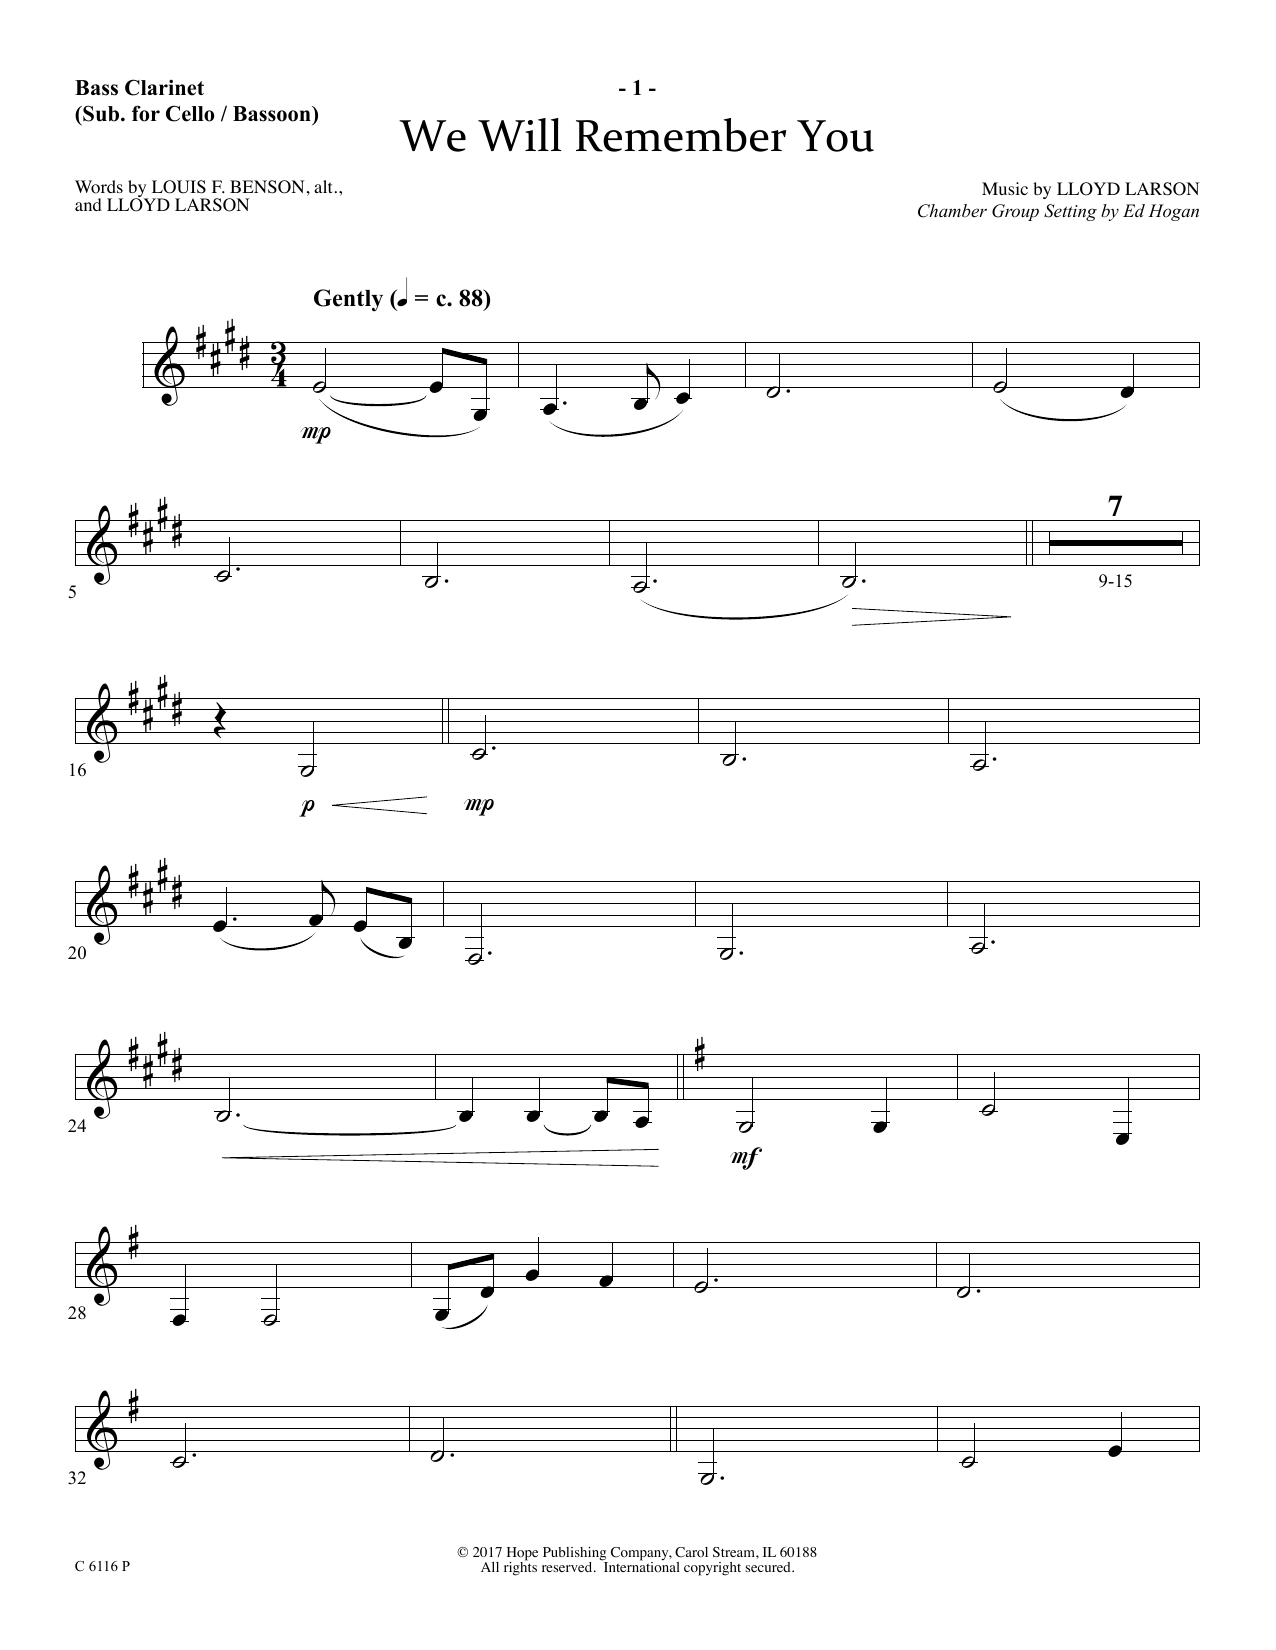 Download Ed Hogan We Will Remember You - Bass Clarinet Sheet Music